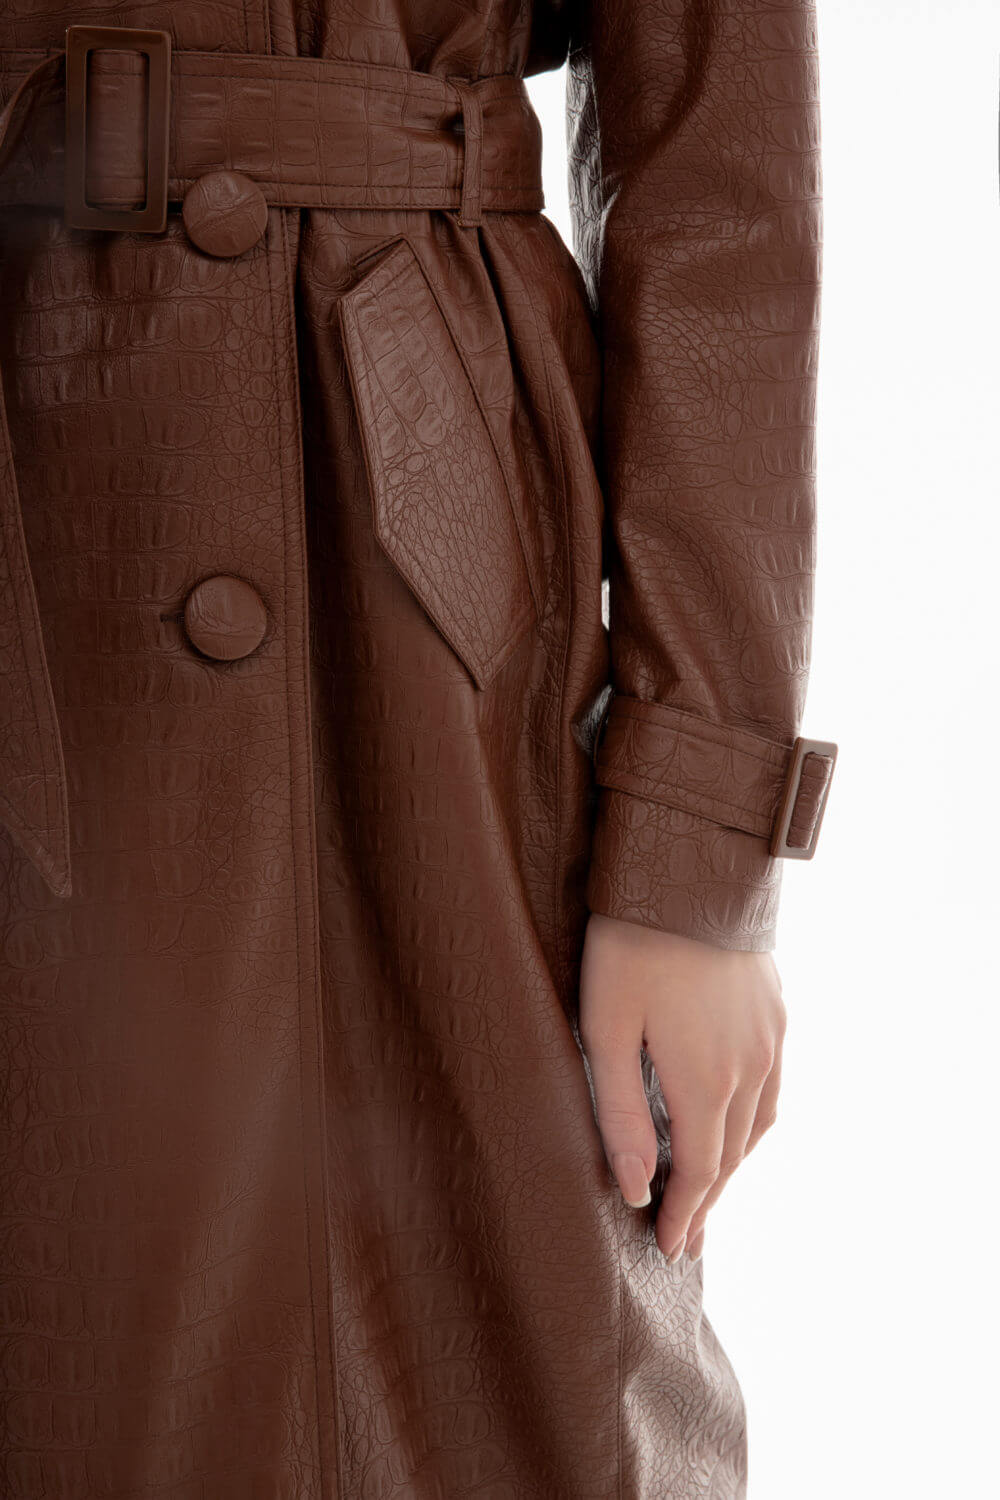 Crocodile embossed brown leather coat